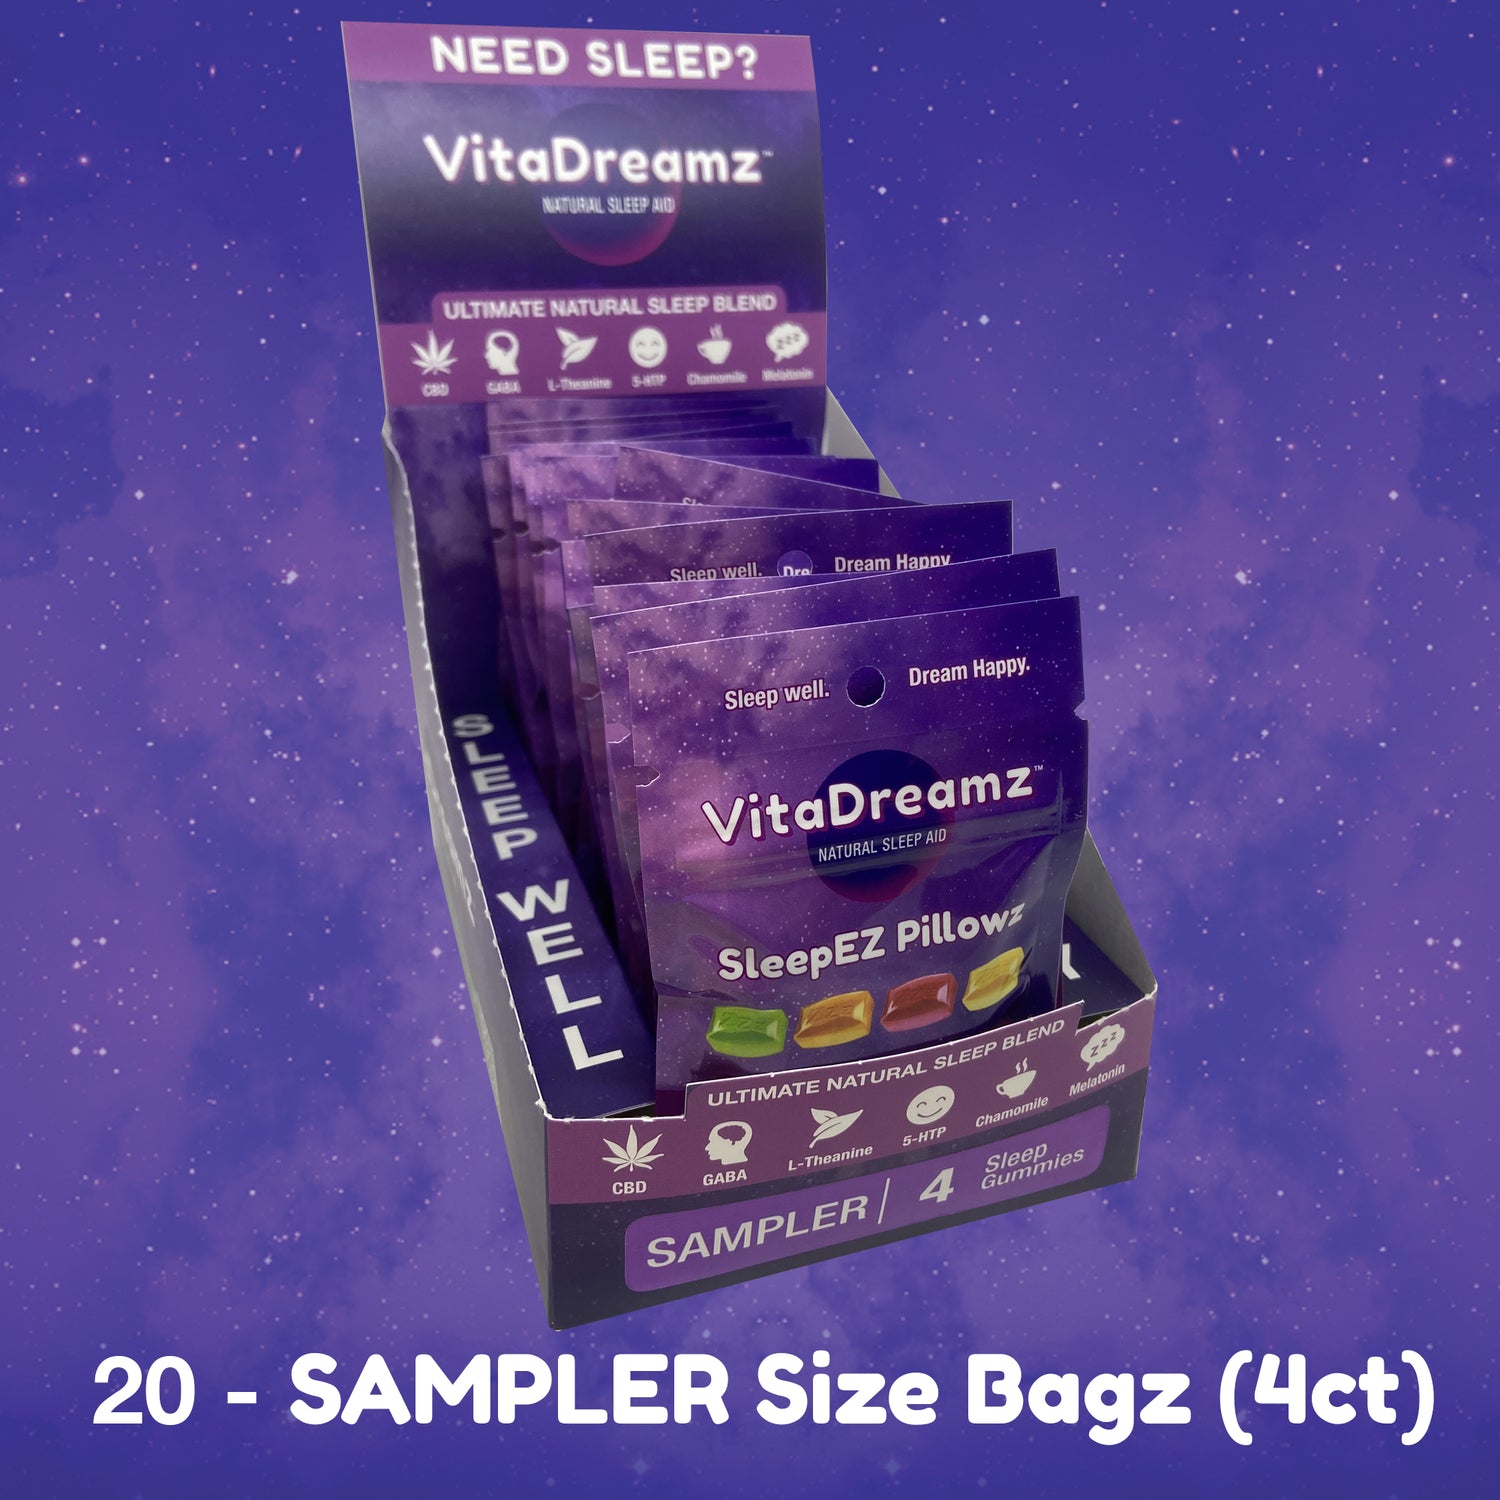 SleepEZ Pillowz SAMPLER Size (4ct) - Box of 20 Bags ($2.50 per Bag) - VitaDreamz